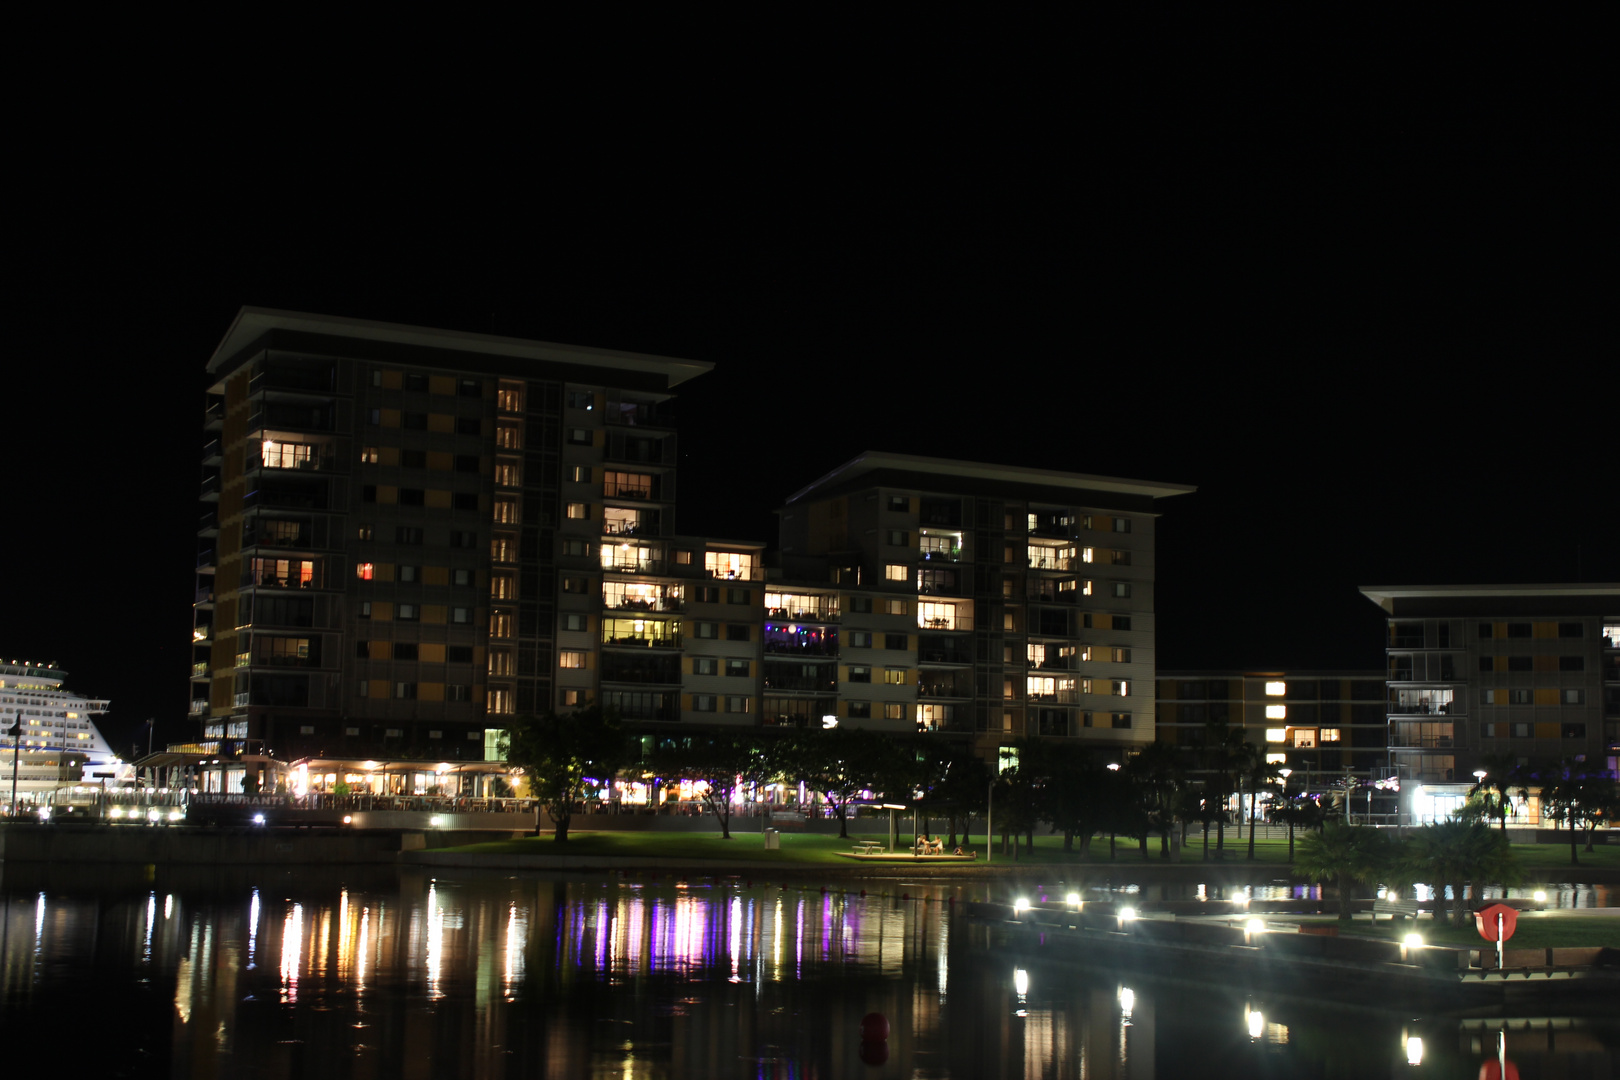 Darwin Waterfront Precinct at night